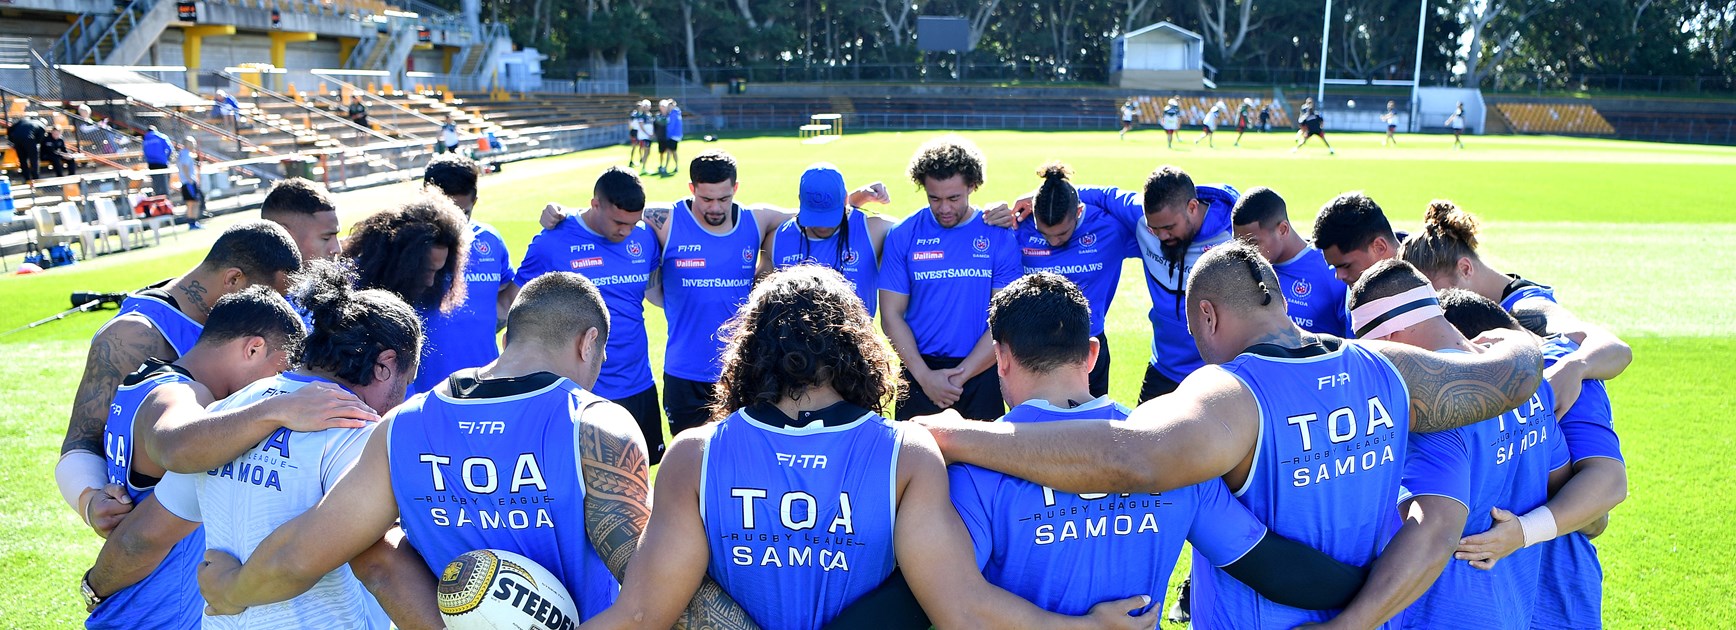 Panthers quartet among new faces in Samoa squad